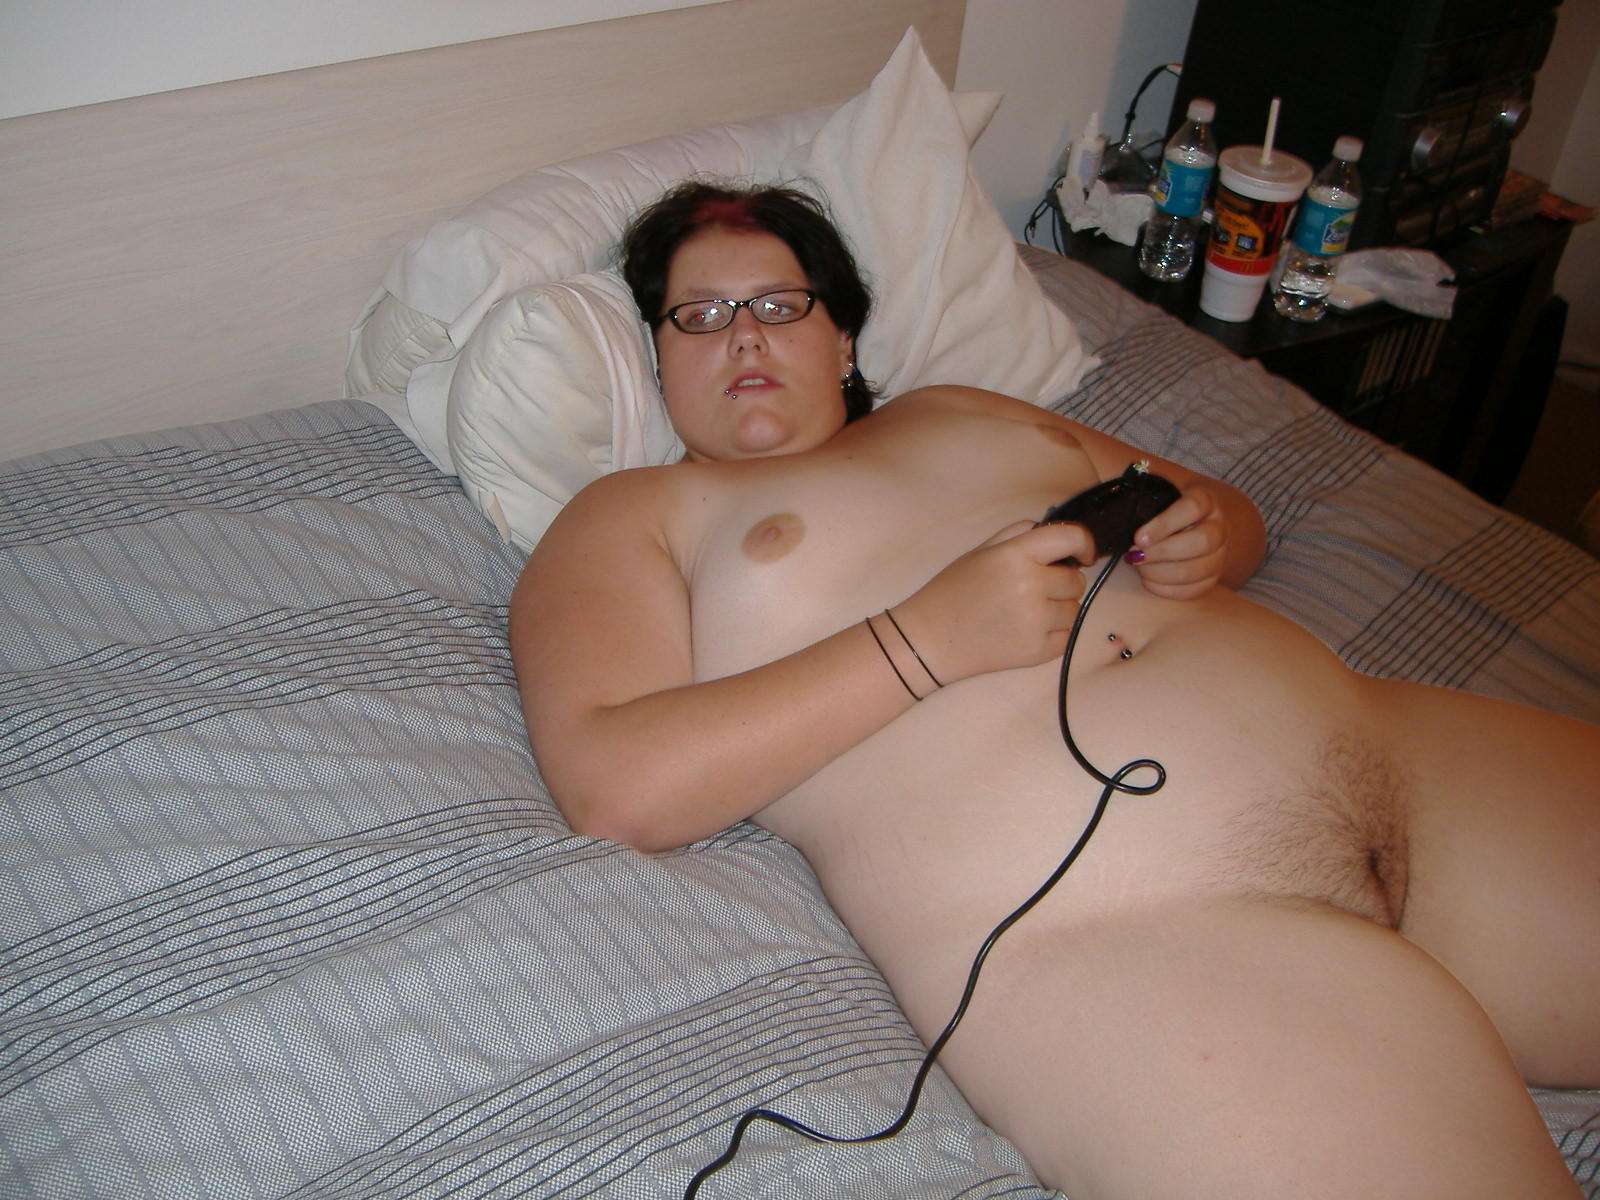 chubby nude gamer girl